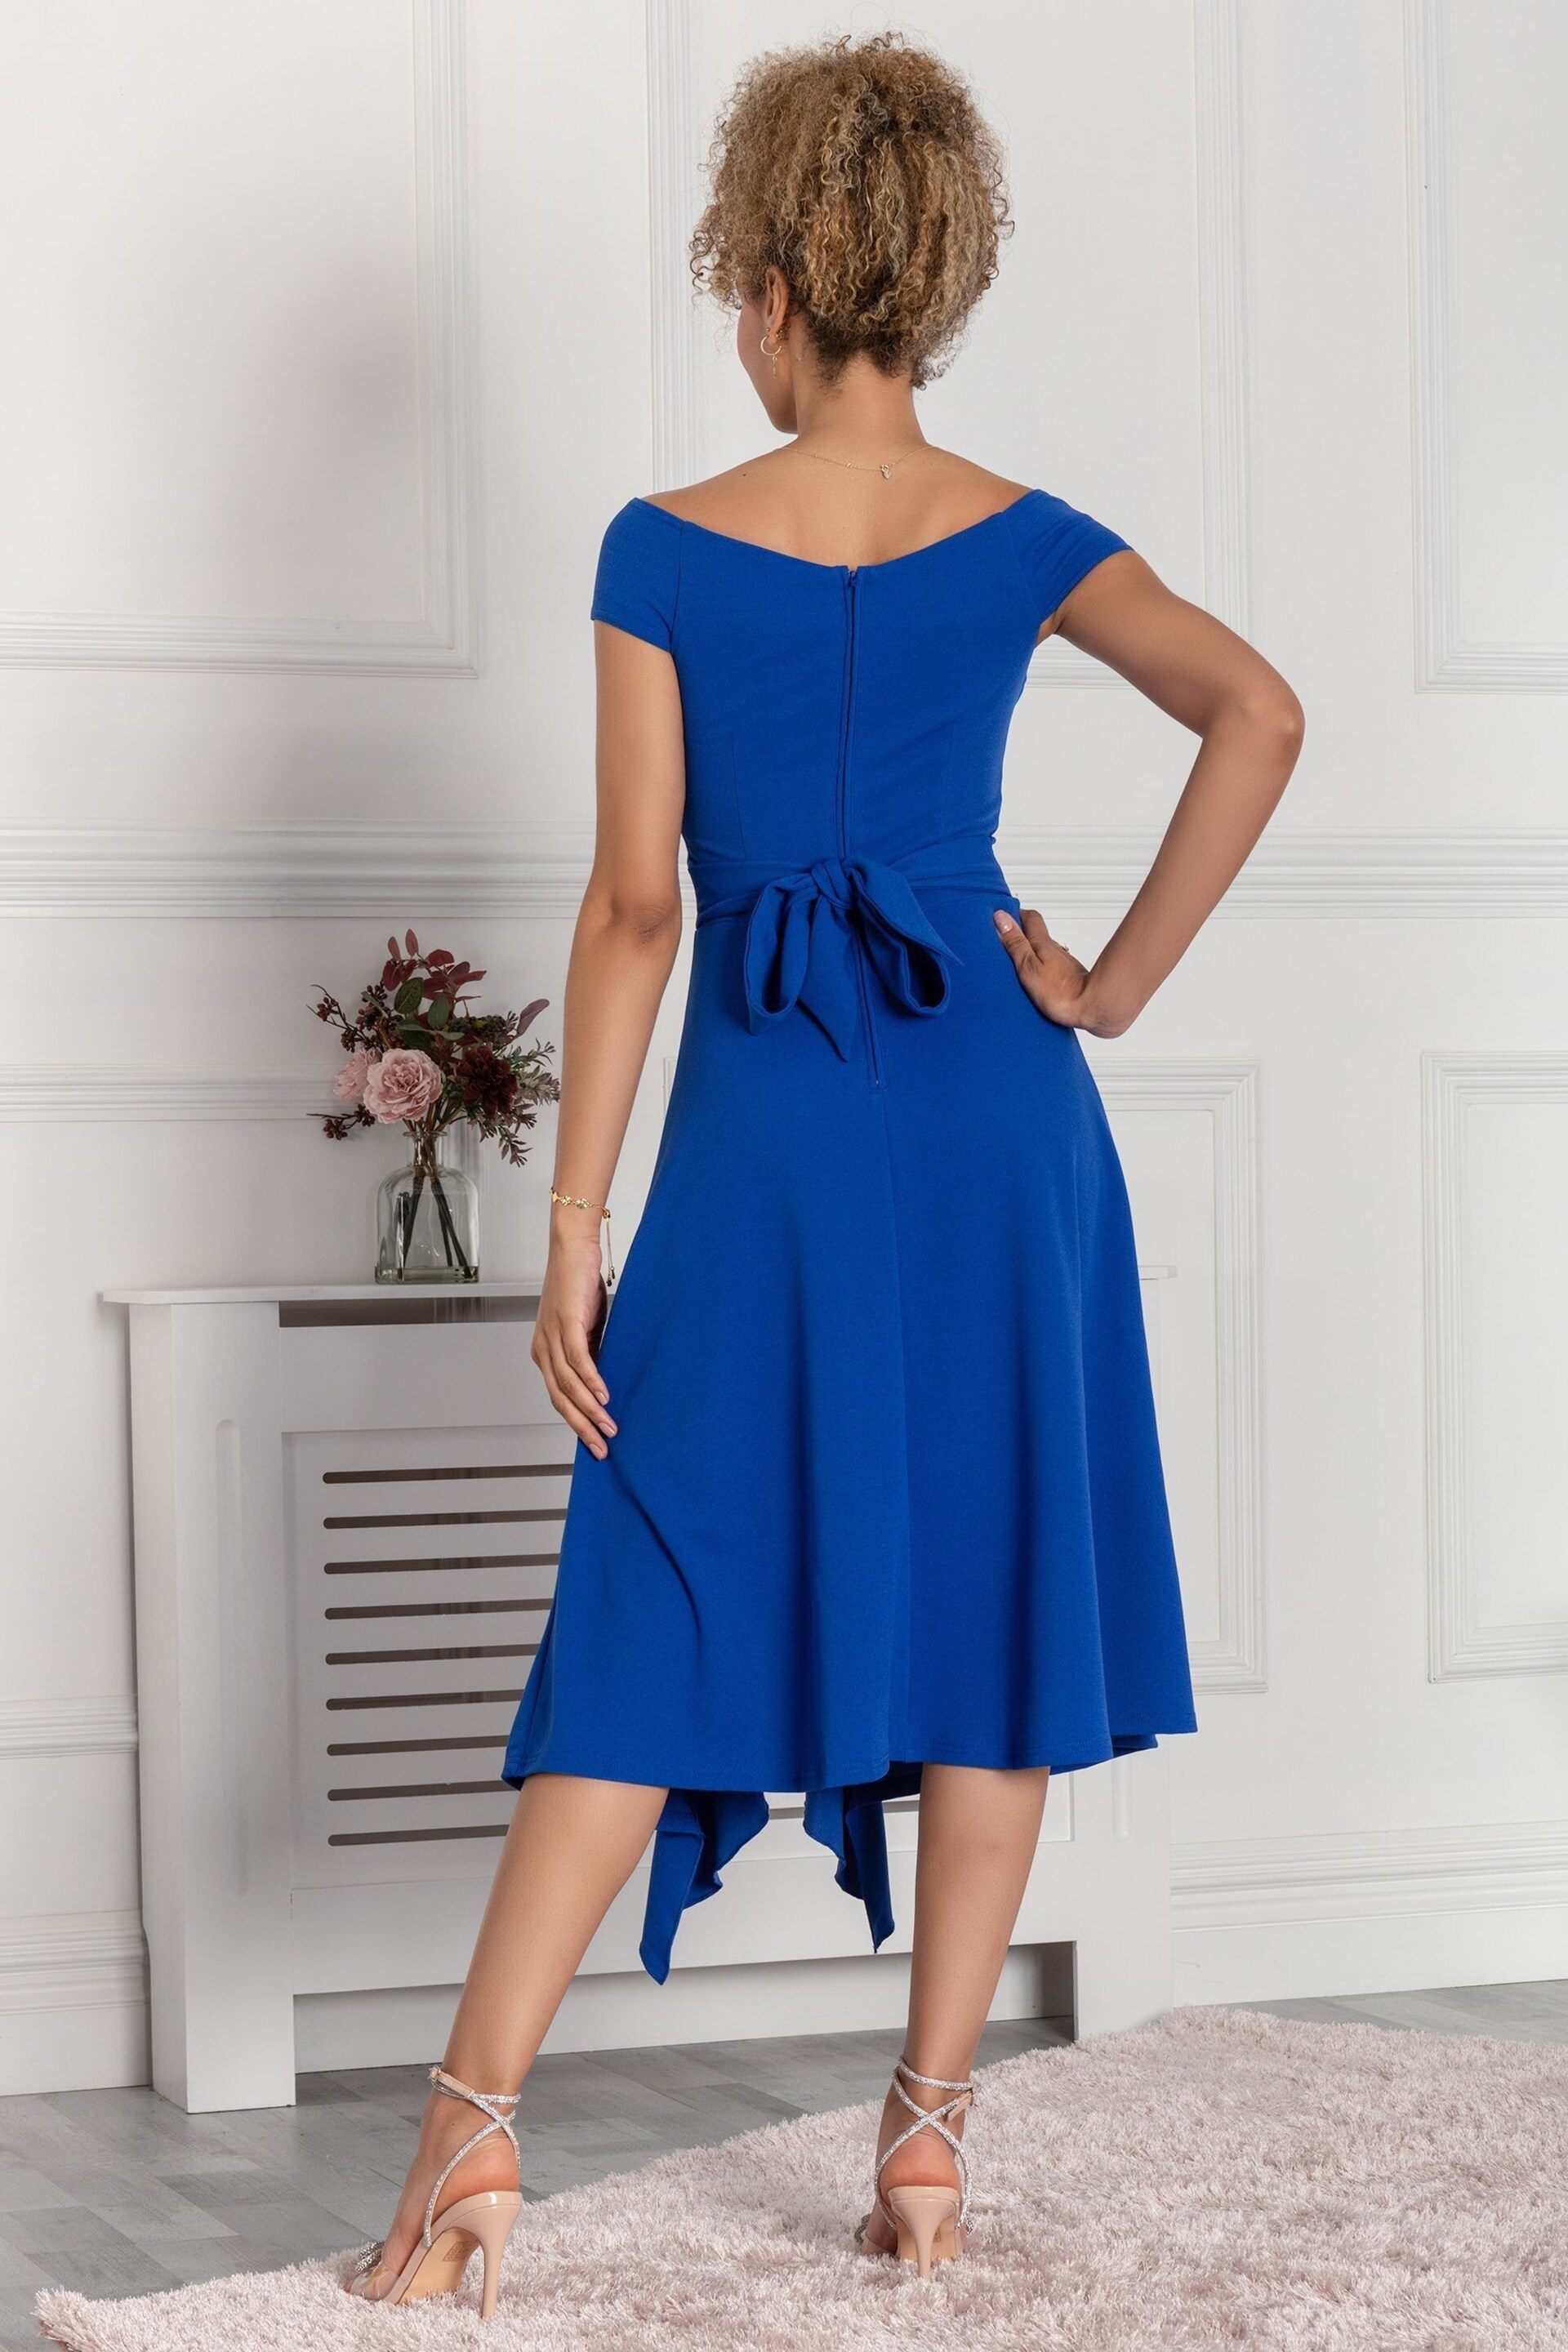 Jolie Moi Cobalt Blue Desiree Frill Fit & Flare Dress - Image 2 of 5